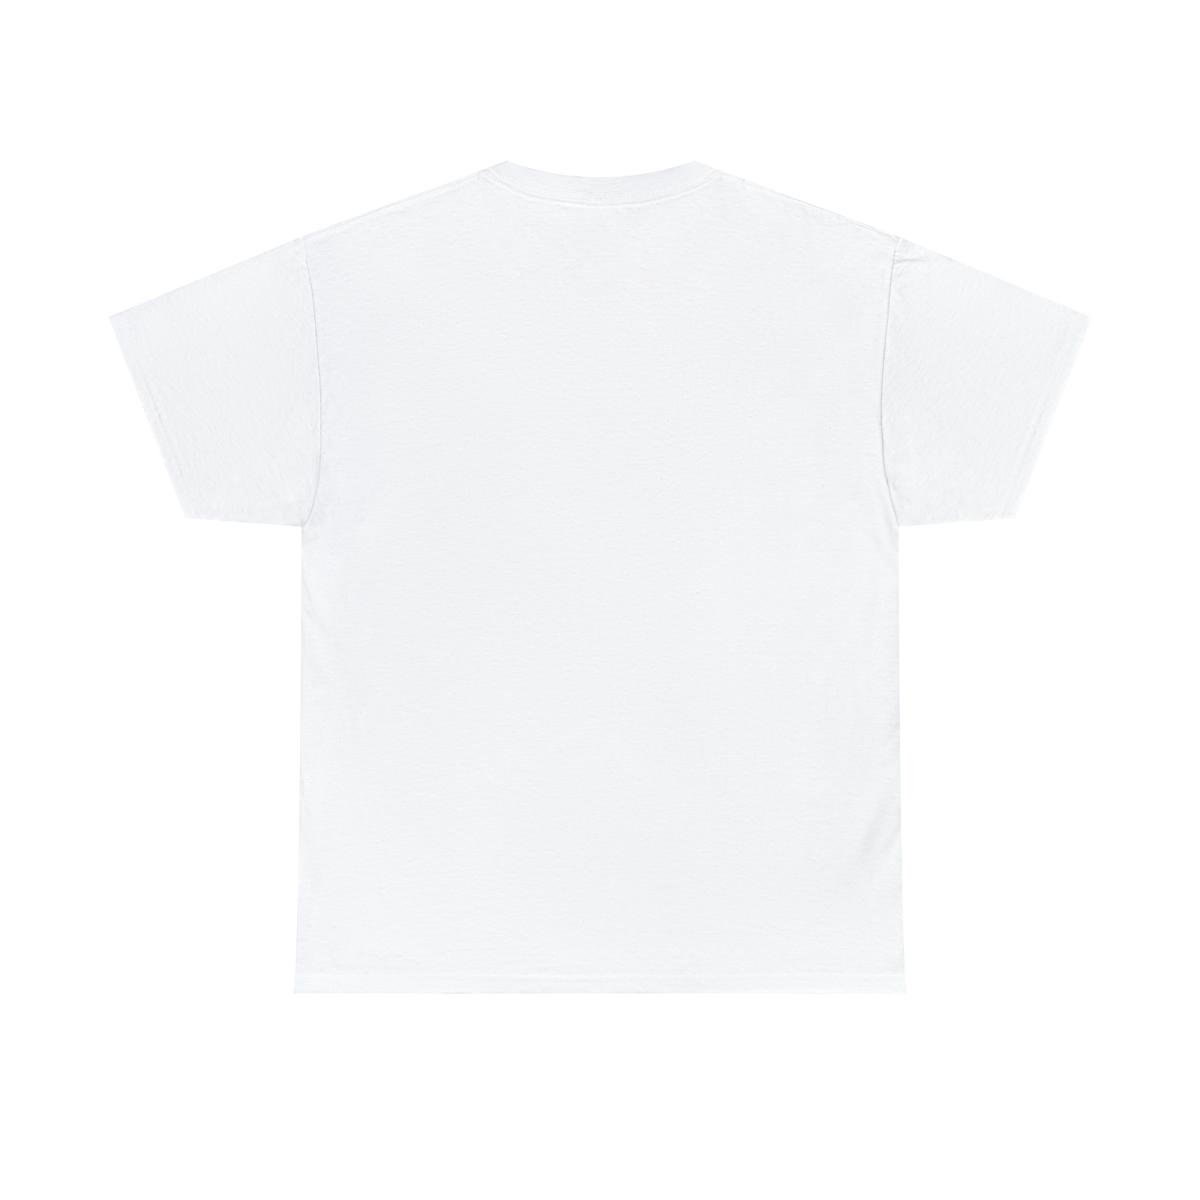 Mawcore – Drum Crest Short Sleeve Tshirt